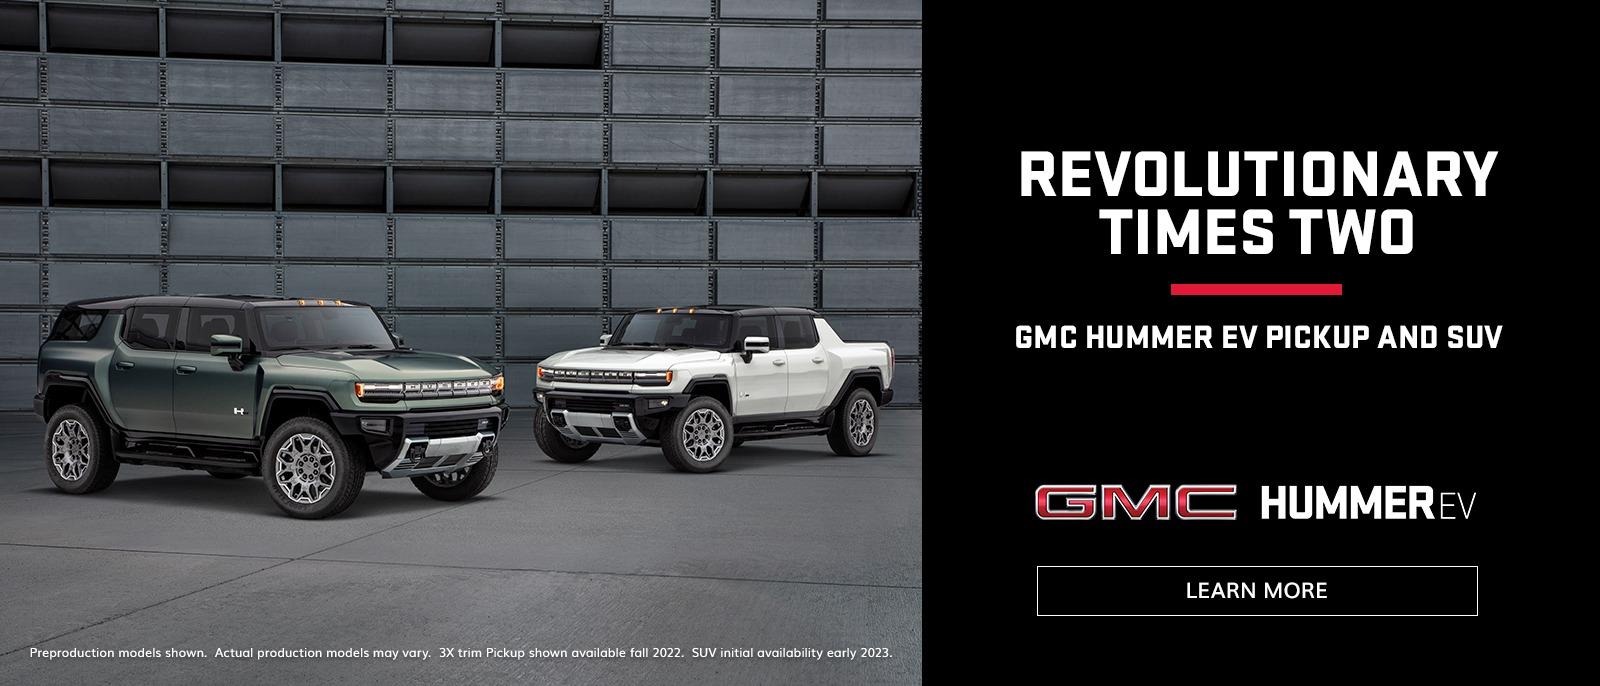 Revolutionary Times Two. GMC Hummer EV Pickup and SUV